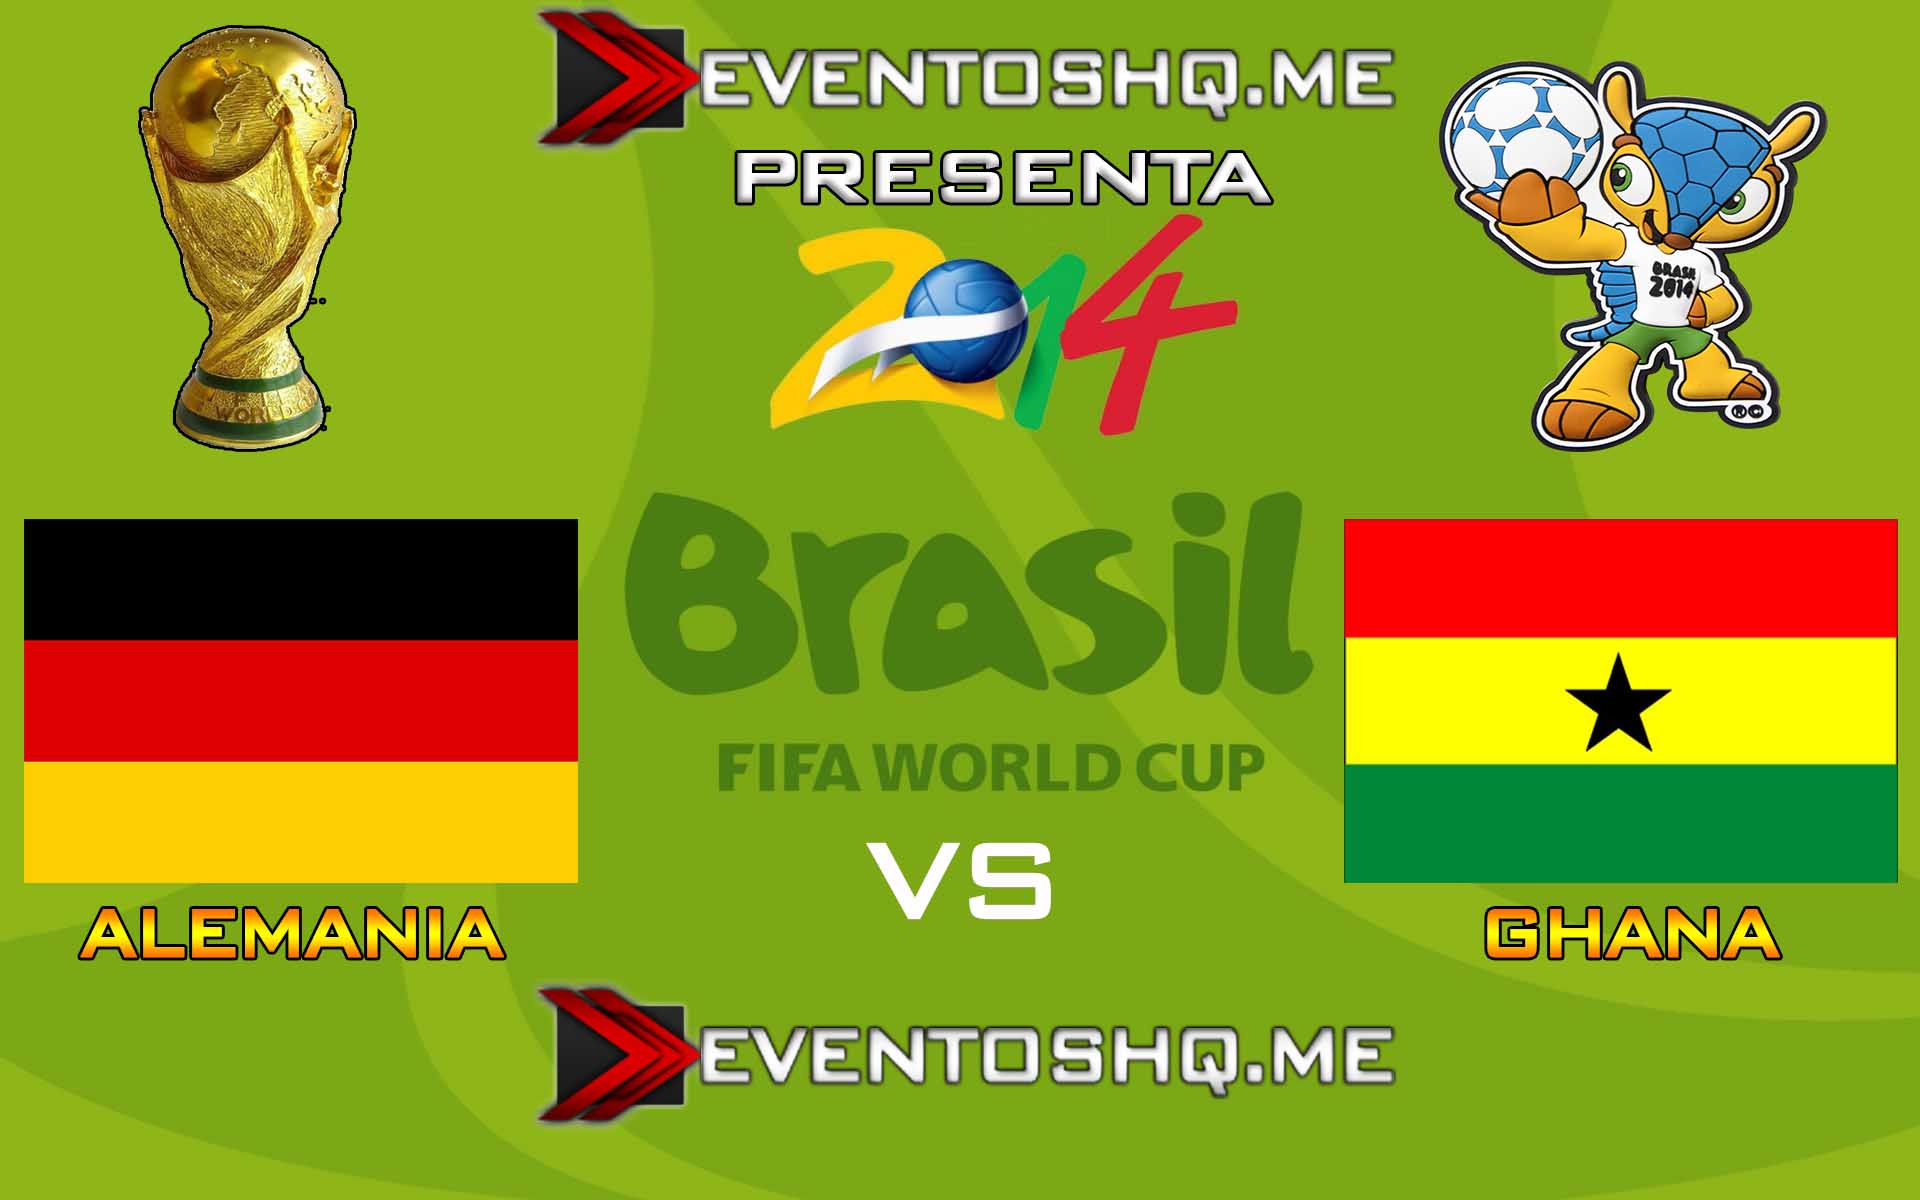 Ver en Vivo Alemania vs Ghana Mundial Brasil 2014 www.eventoshq.me